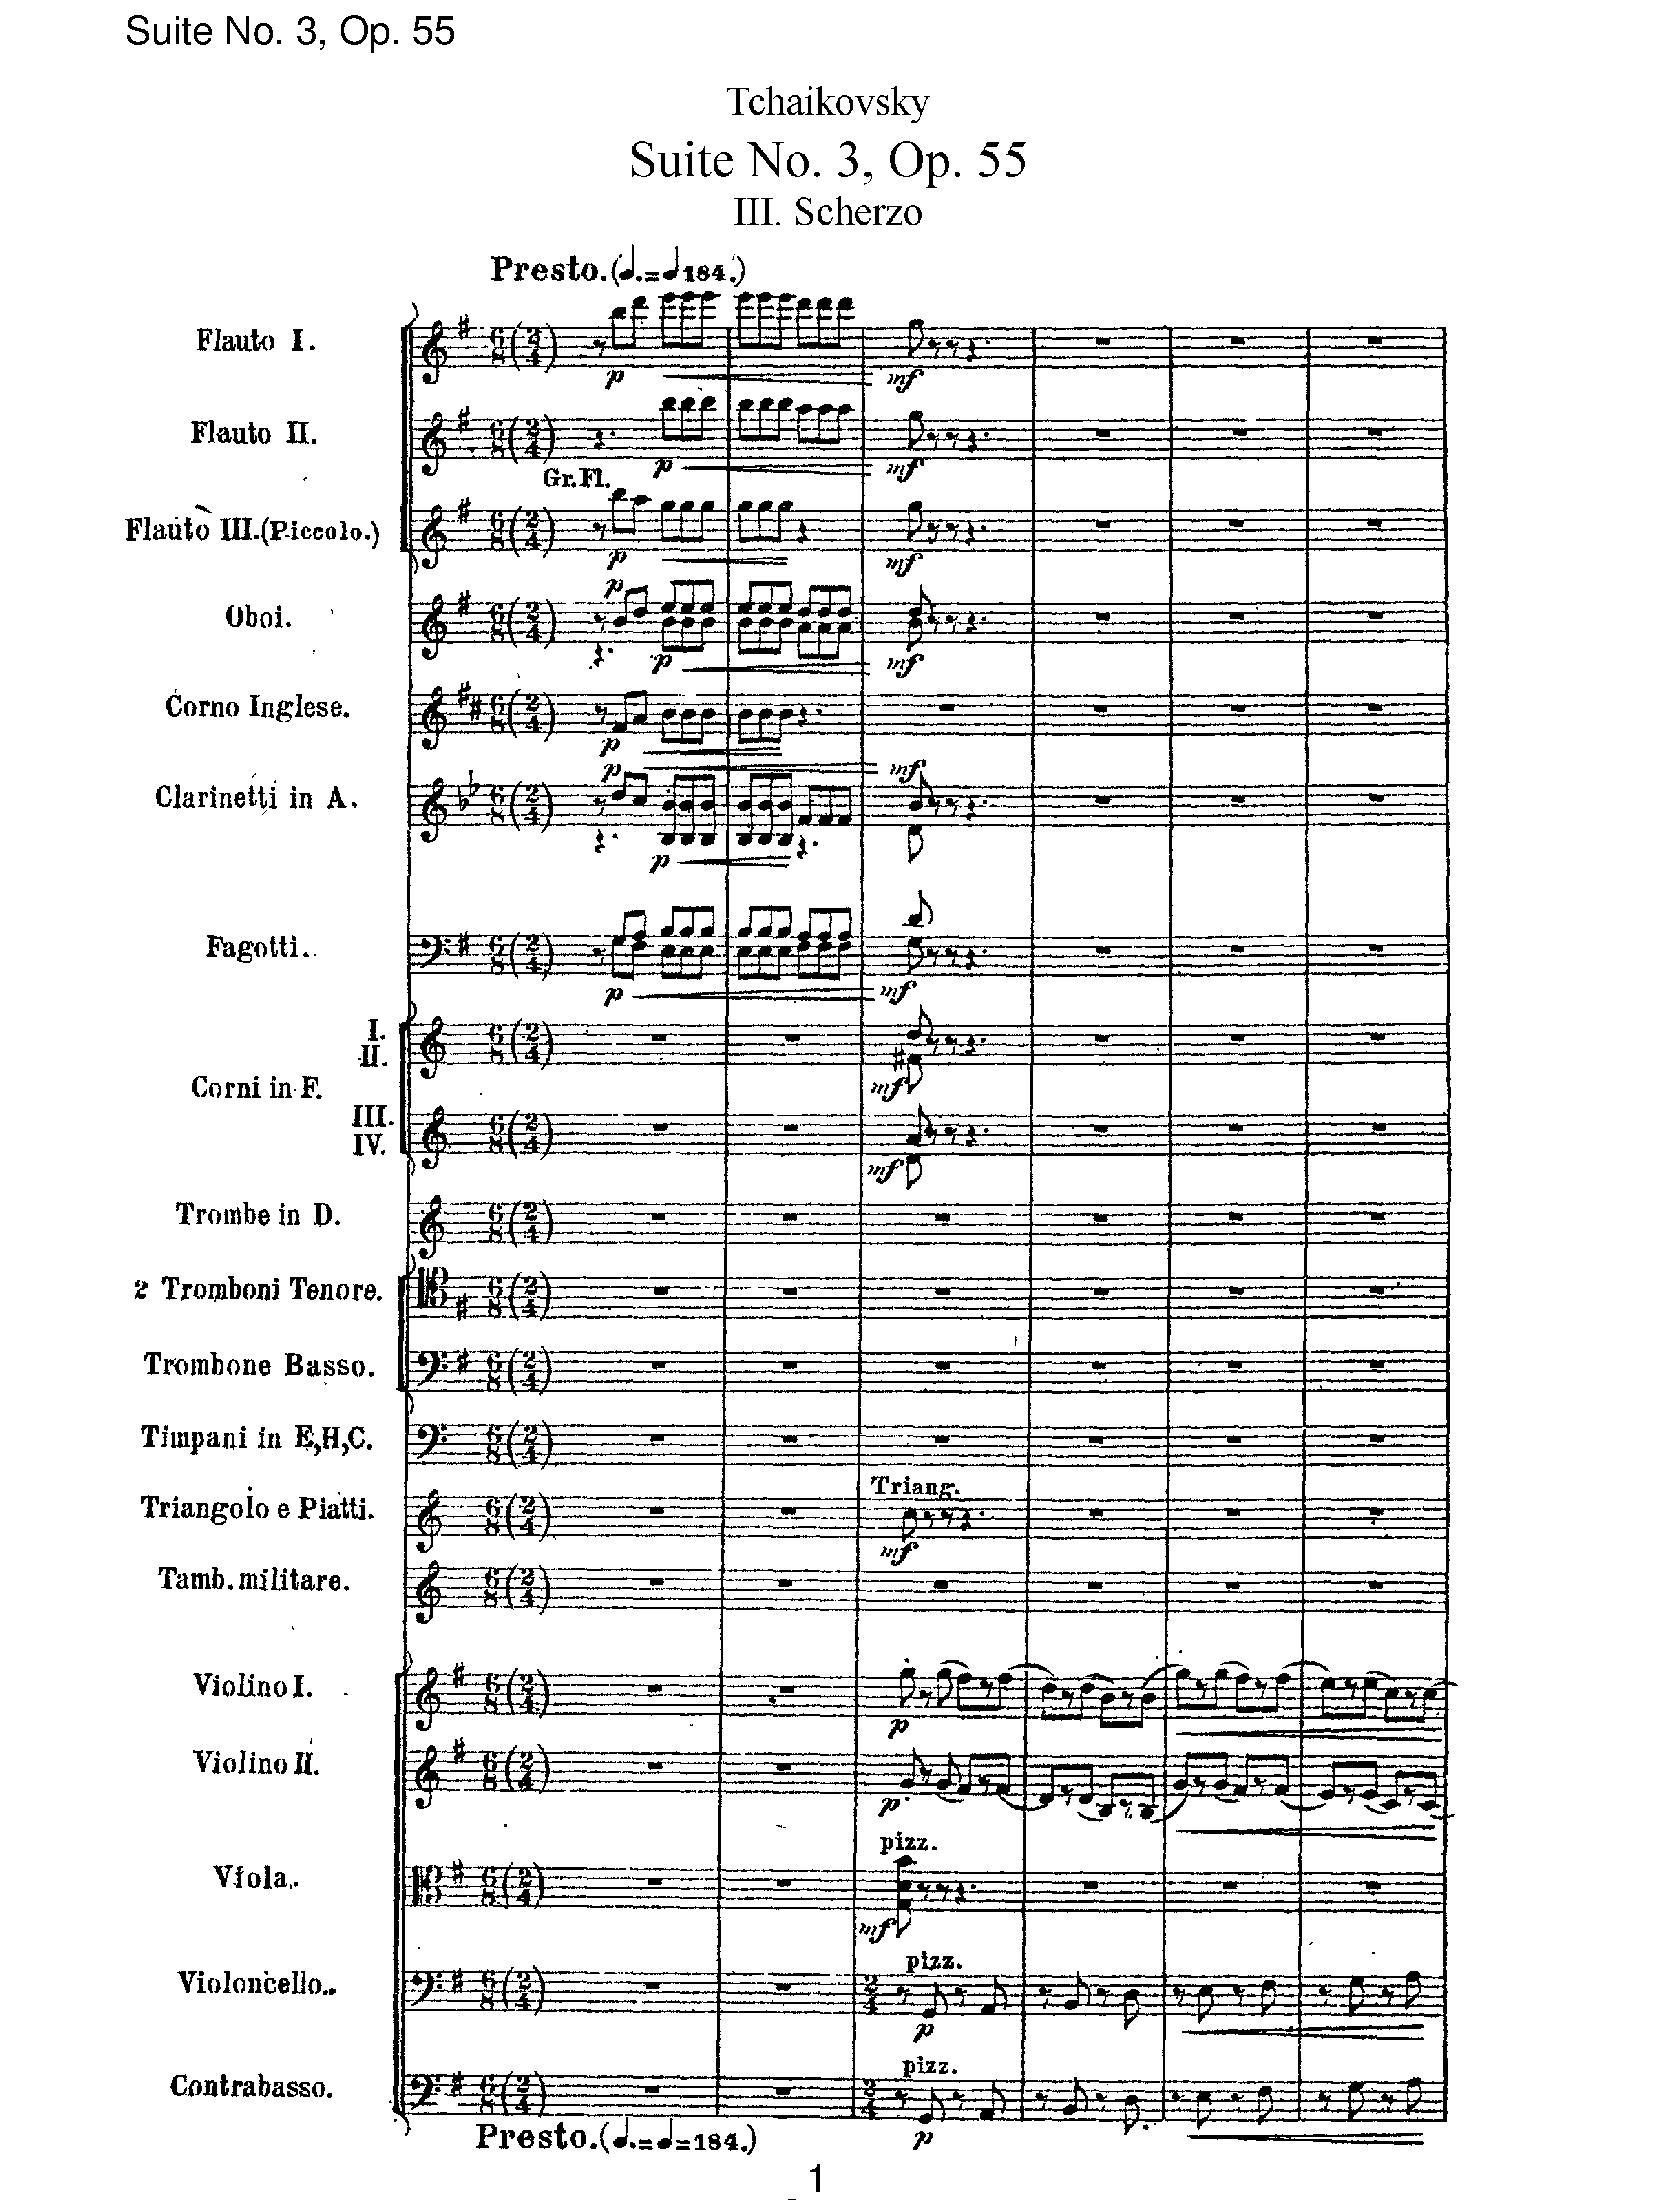 Tchaikovsky, Pyotr Ilyich - Suite No. 3, Op. 55 III.Scherzo Sheet music ...